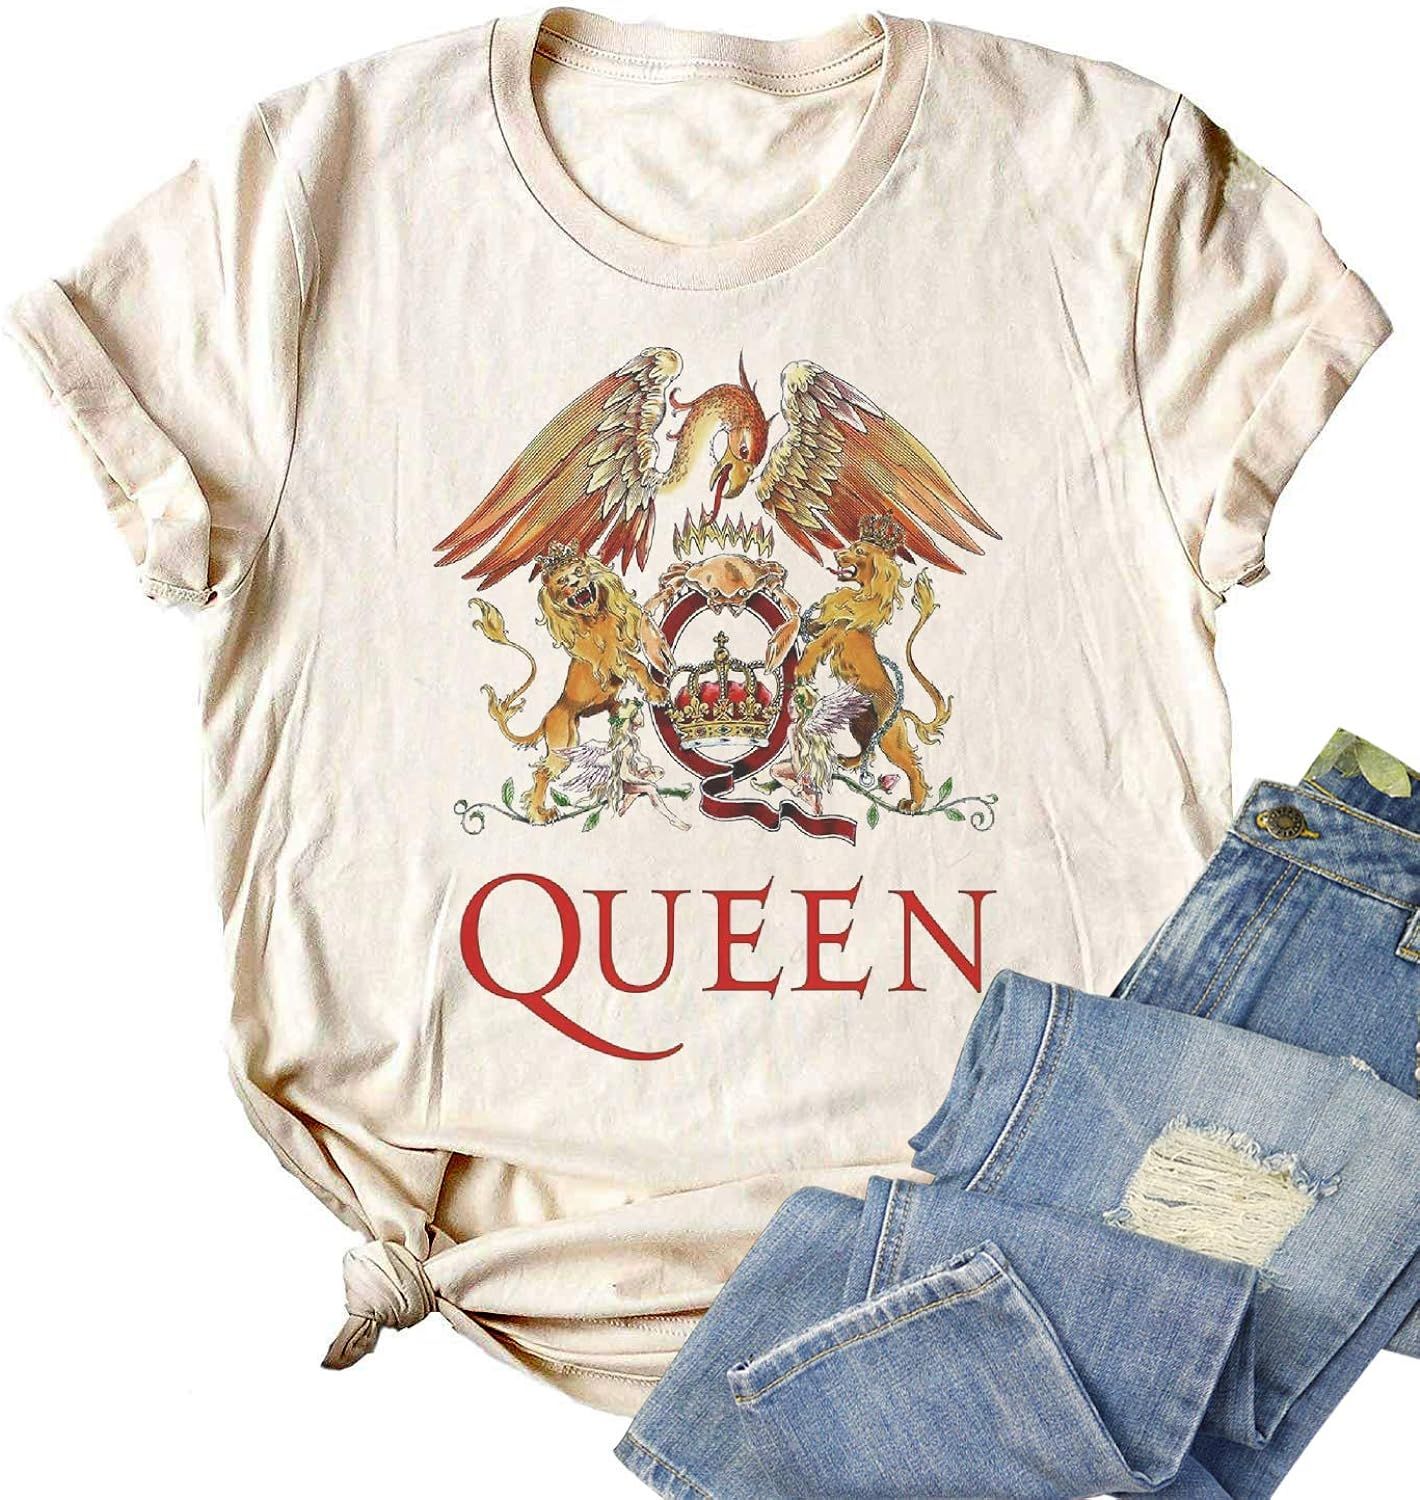 Women Vintage Rock Band T Shirt Fashion Rock Music Graphic Tees Shirt Summer Short Sleeve Casual ... | Amazon (US)